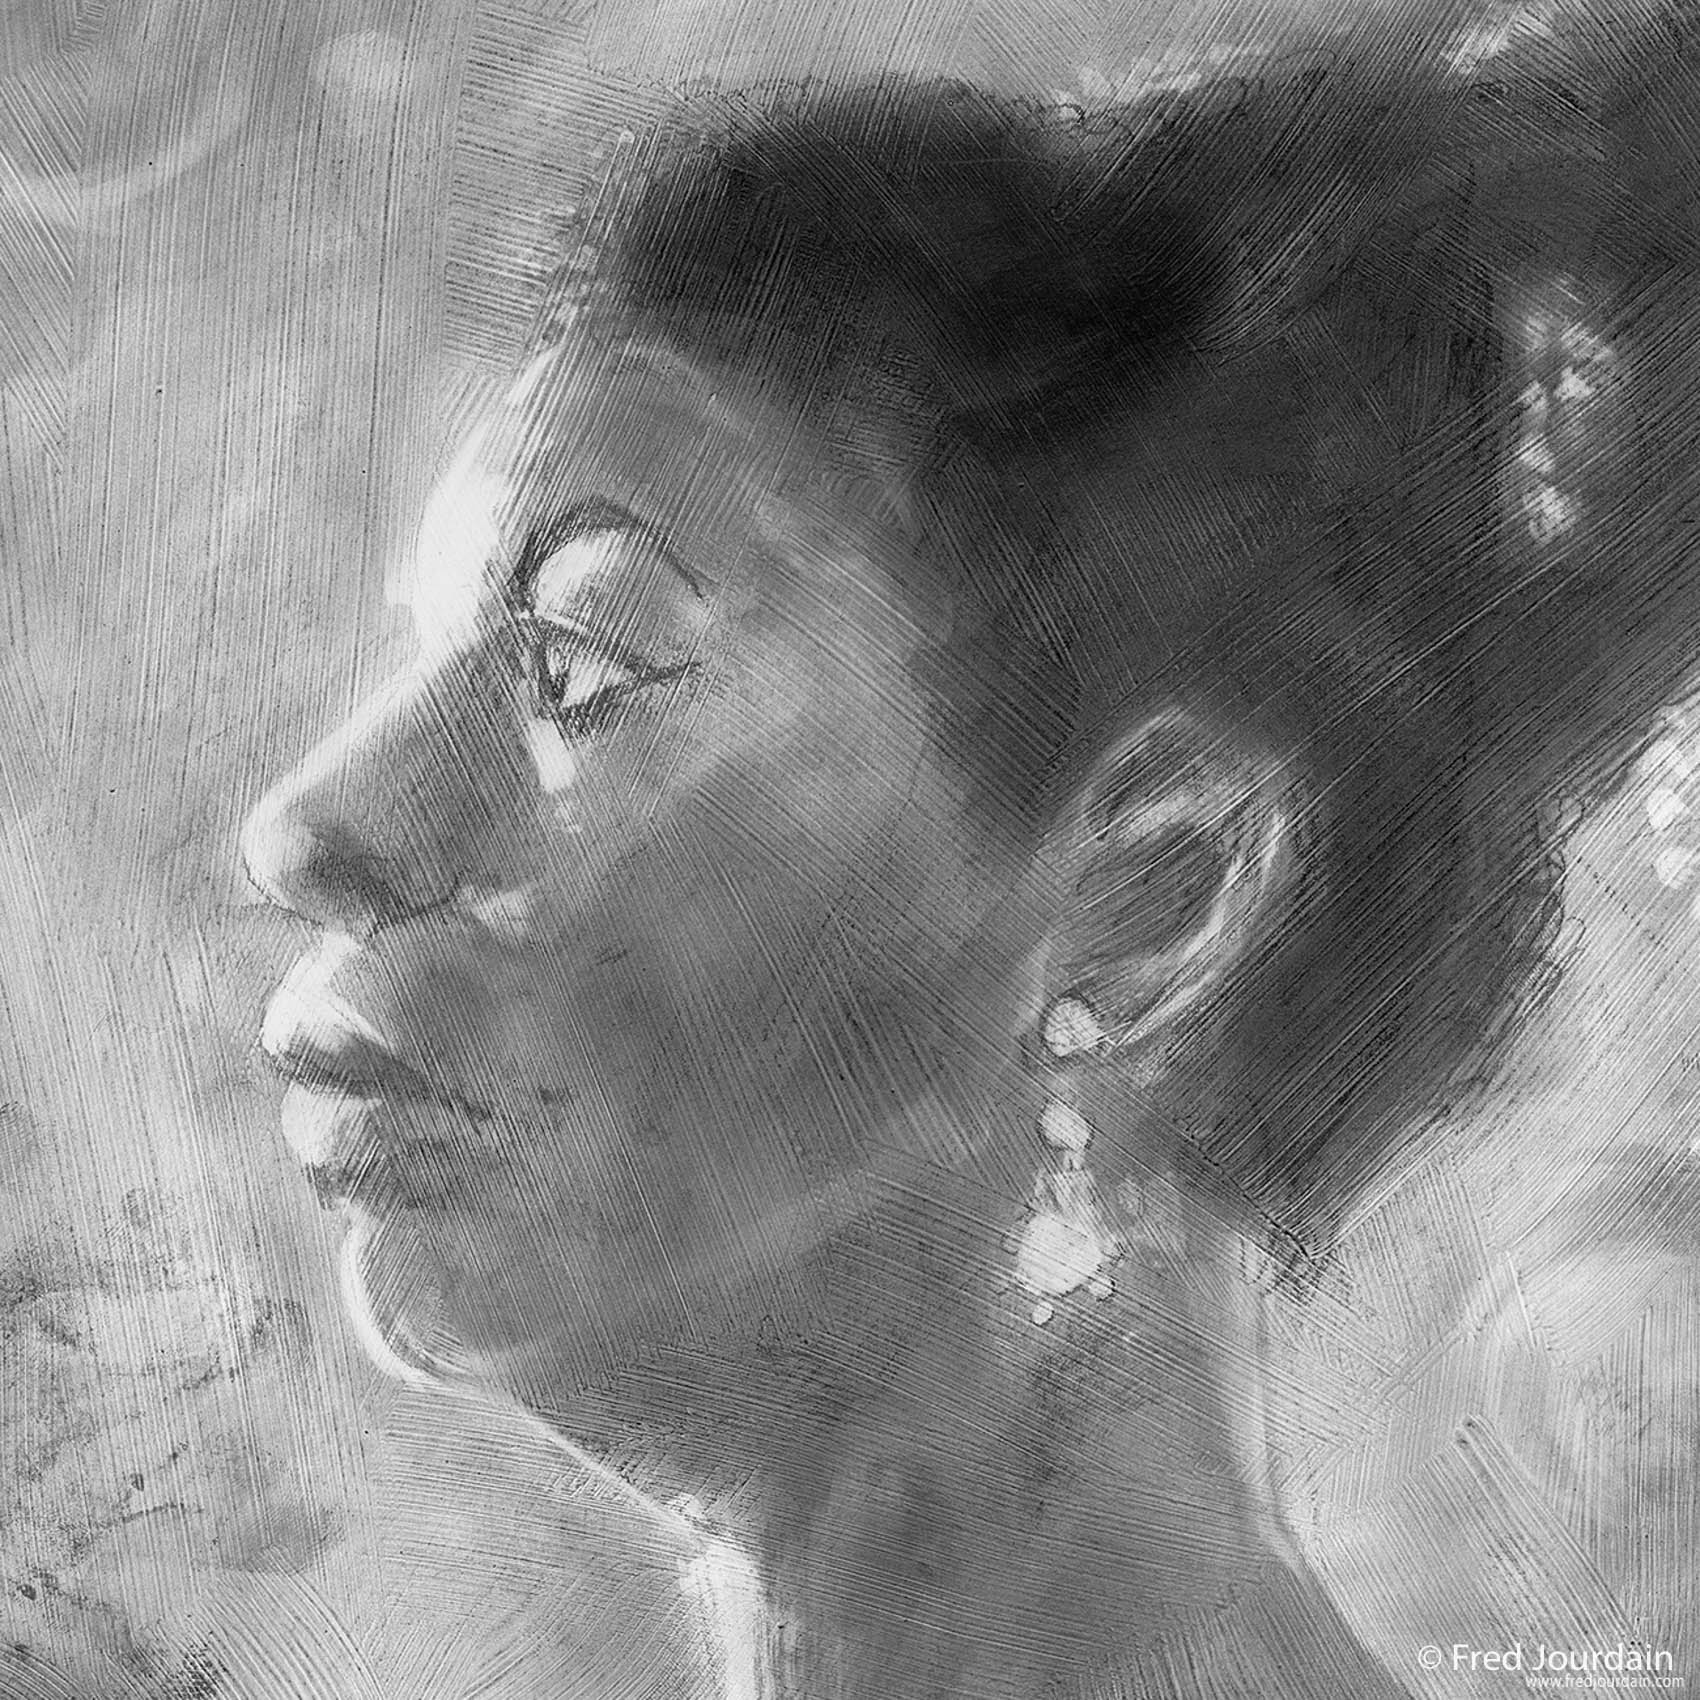 Nina Simone - graphite 11” x 14”